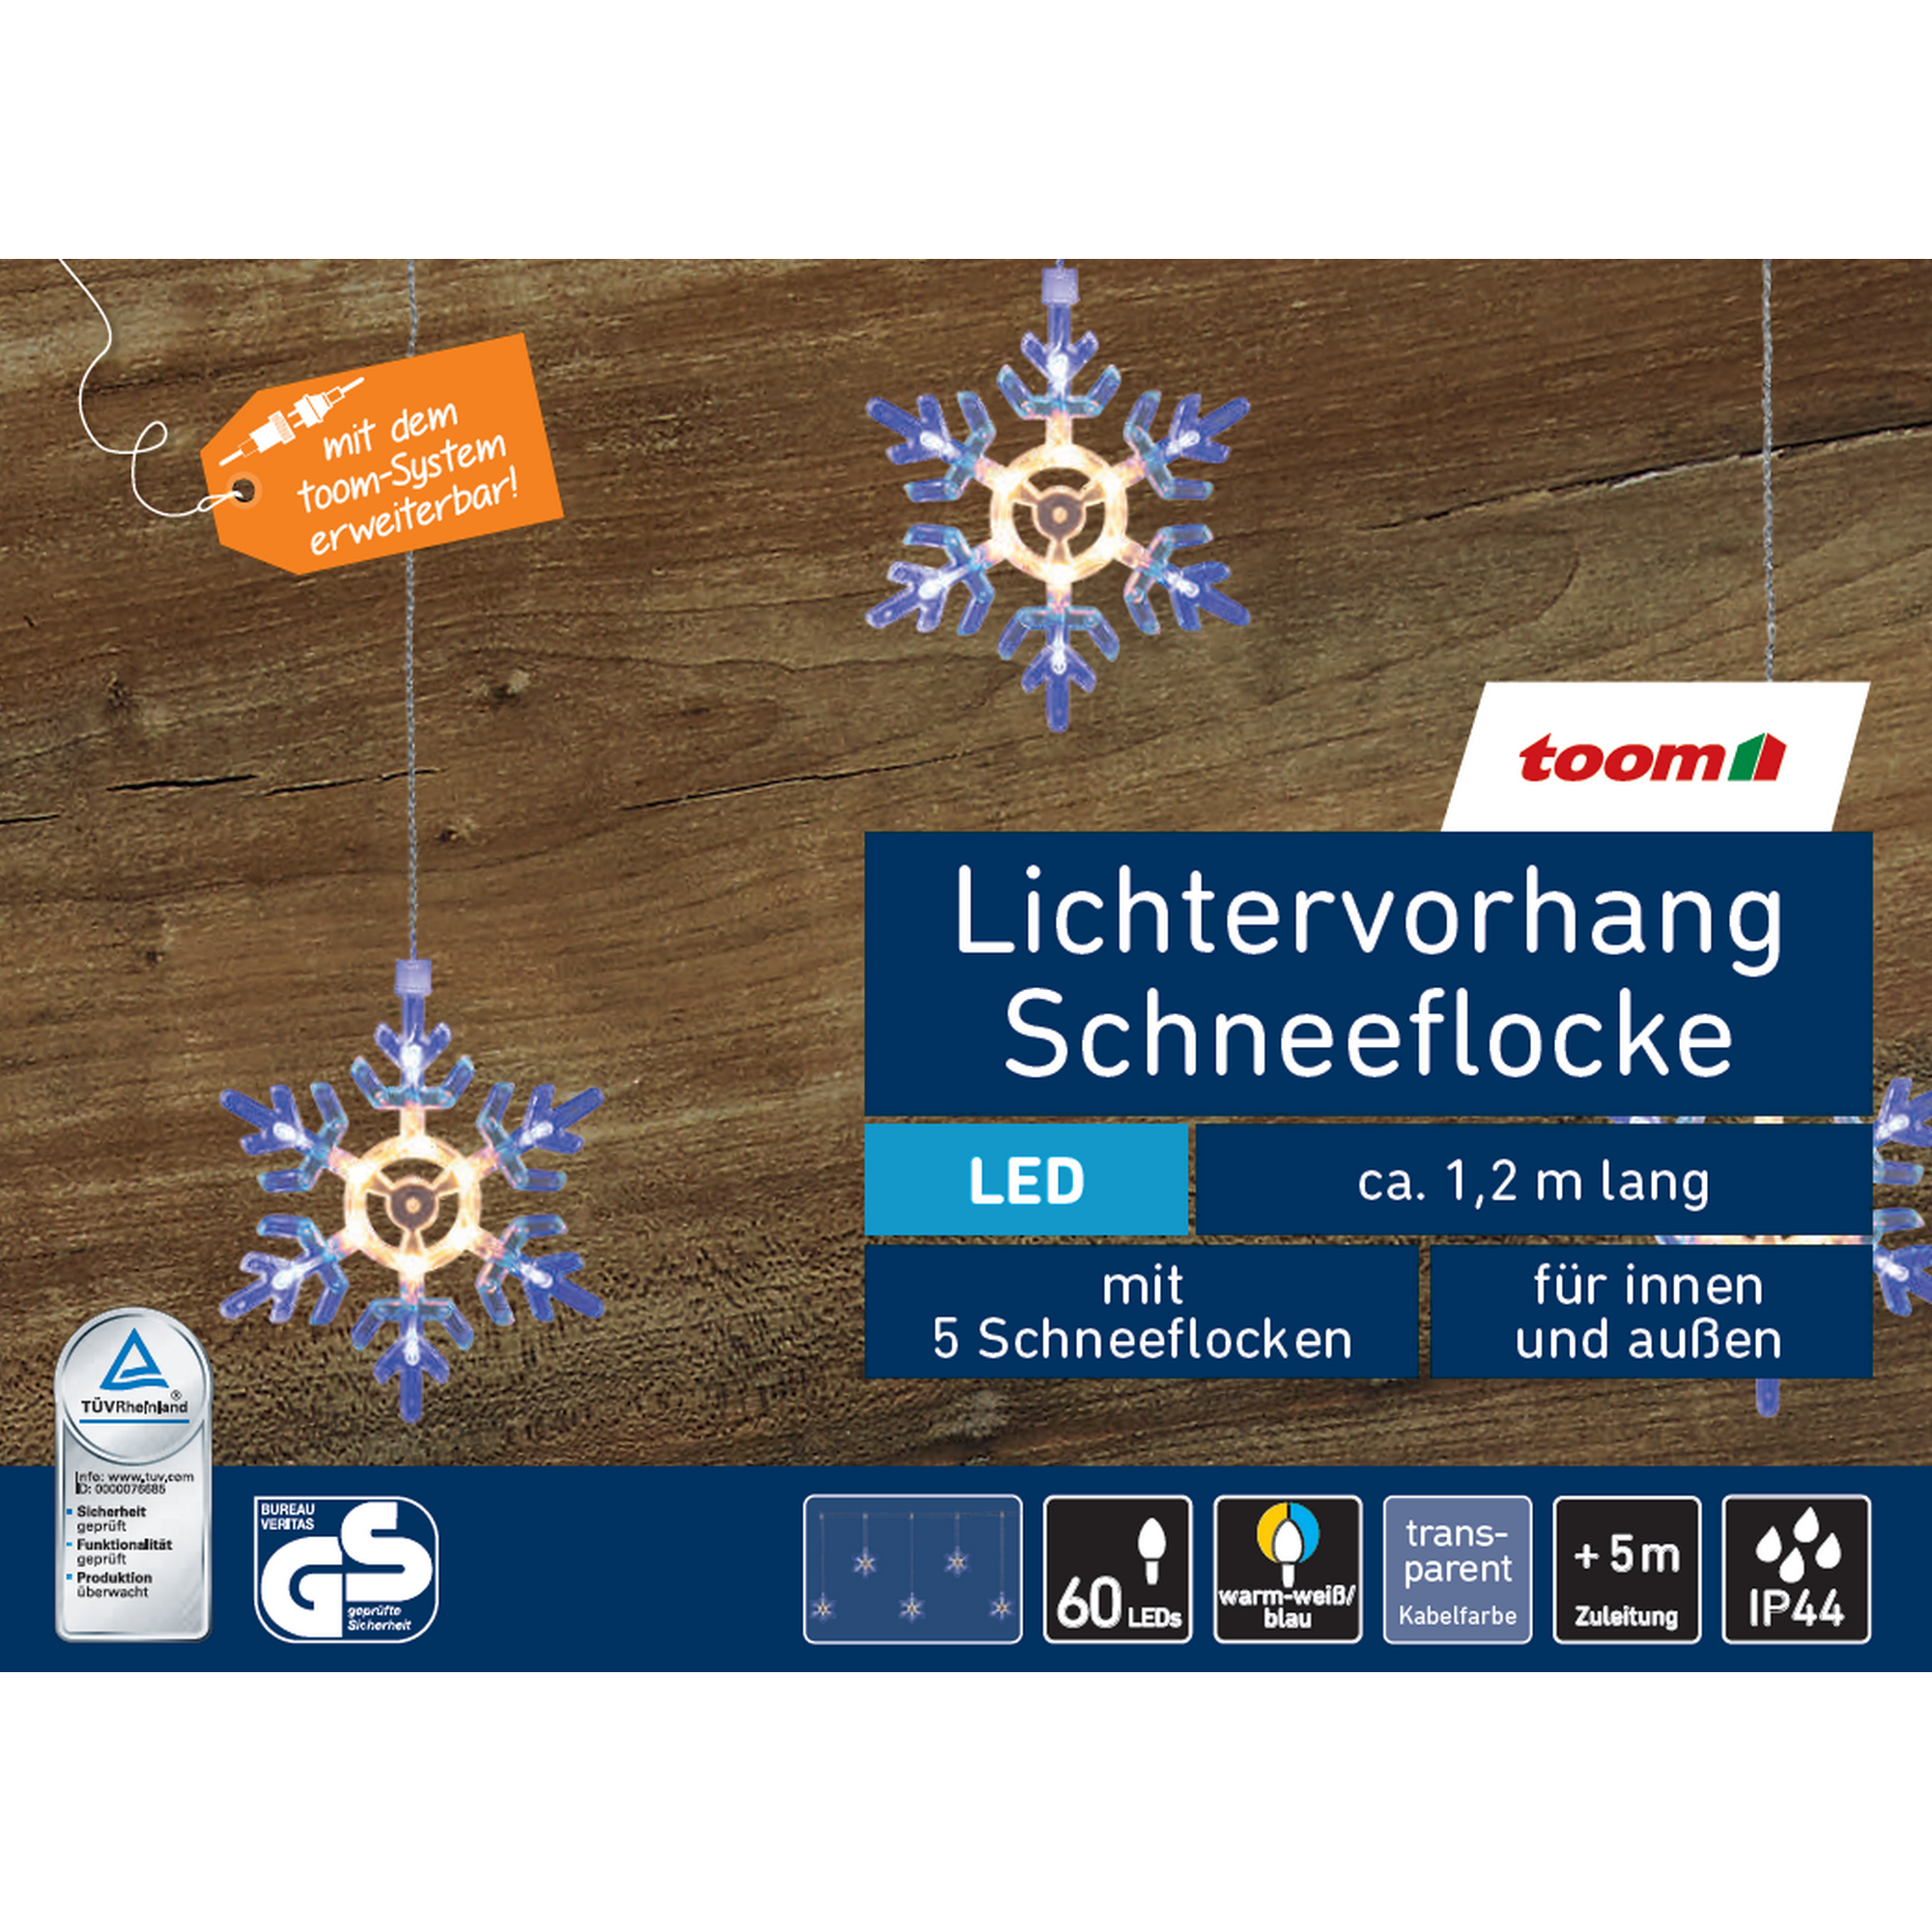 LED-Lichtervorhang 'Schneeflocke' 60 LEDs warmweiß/blau 120 cm + product picture